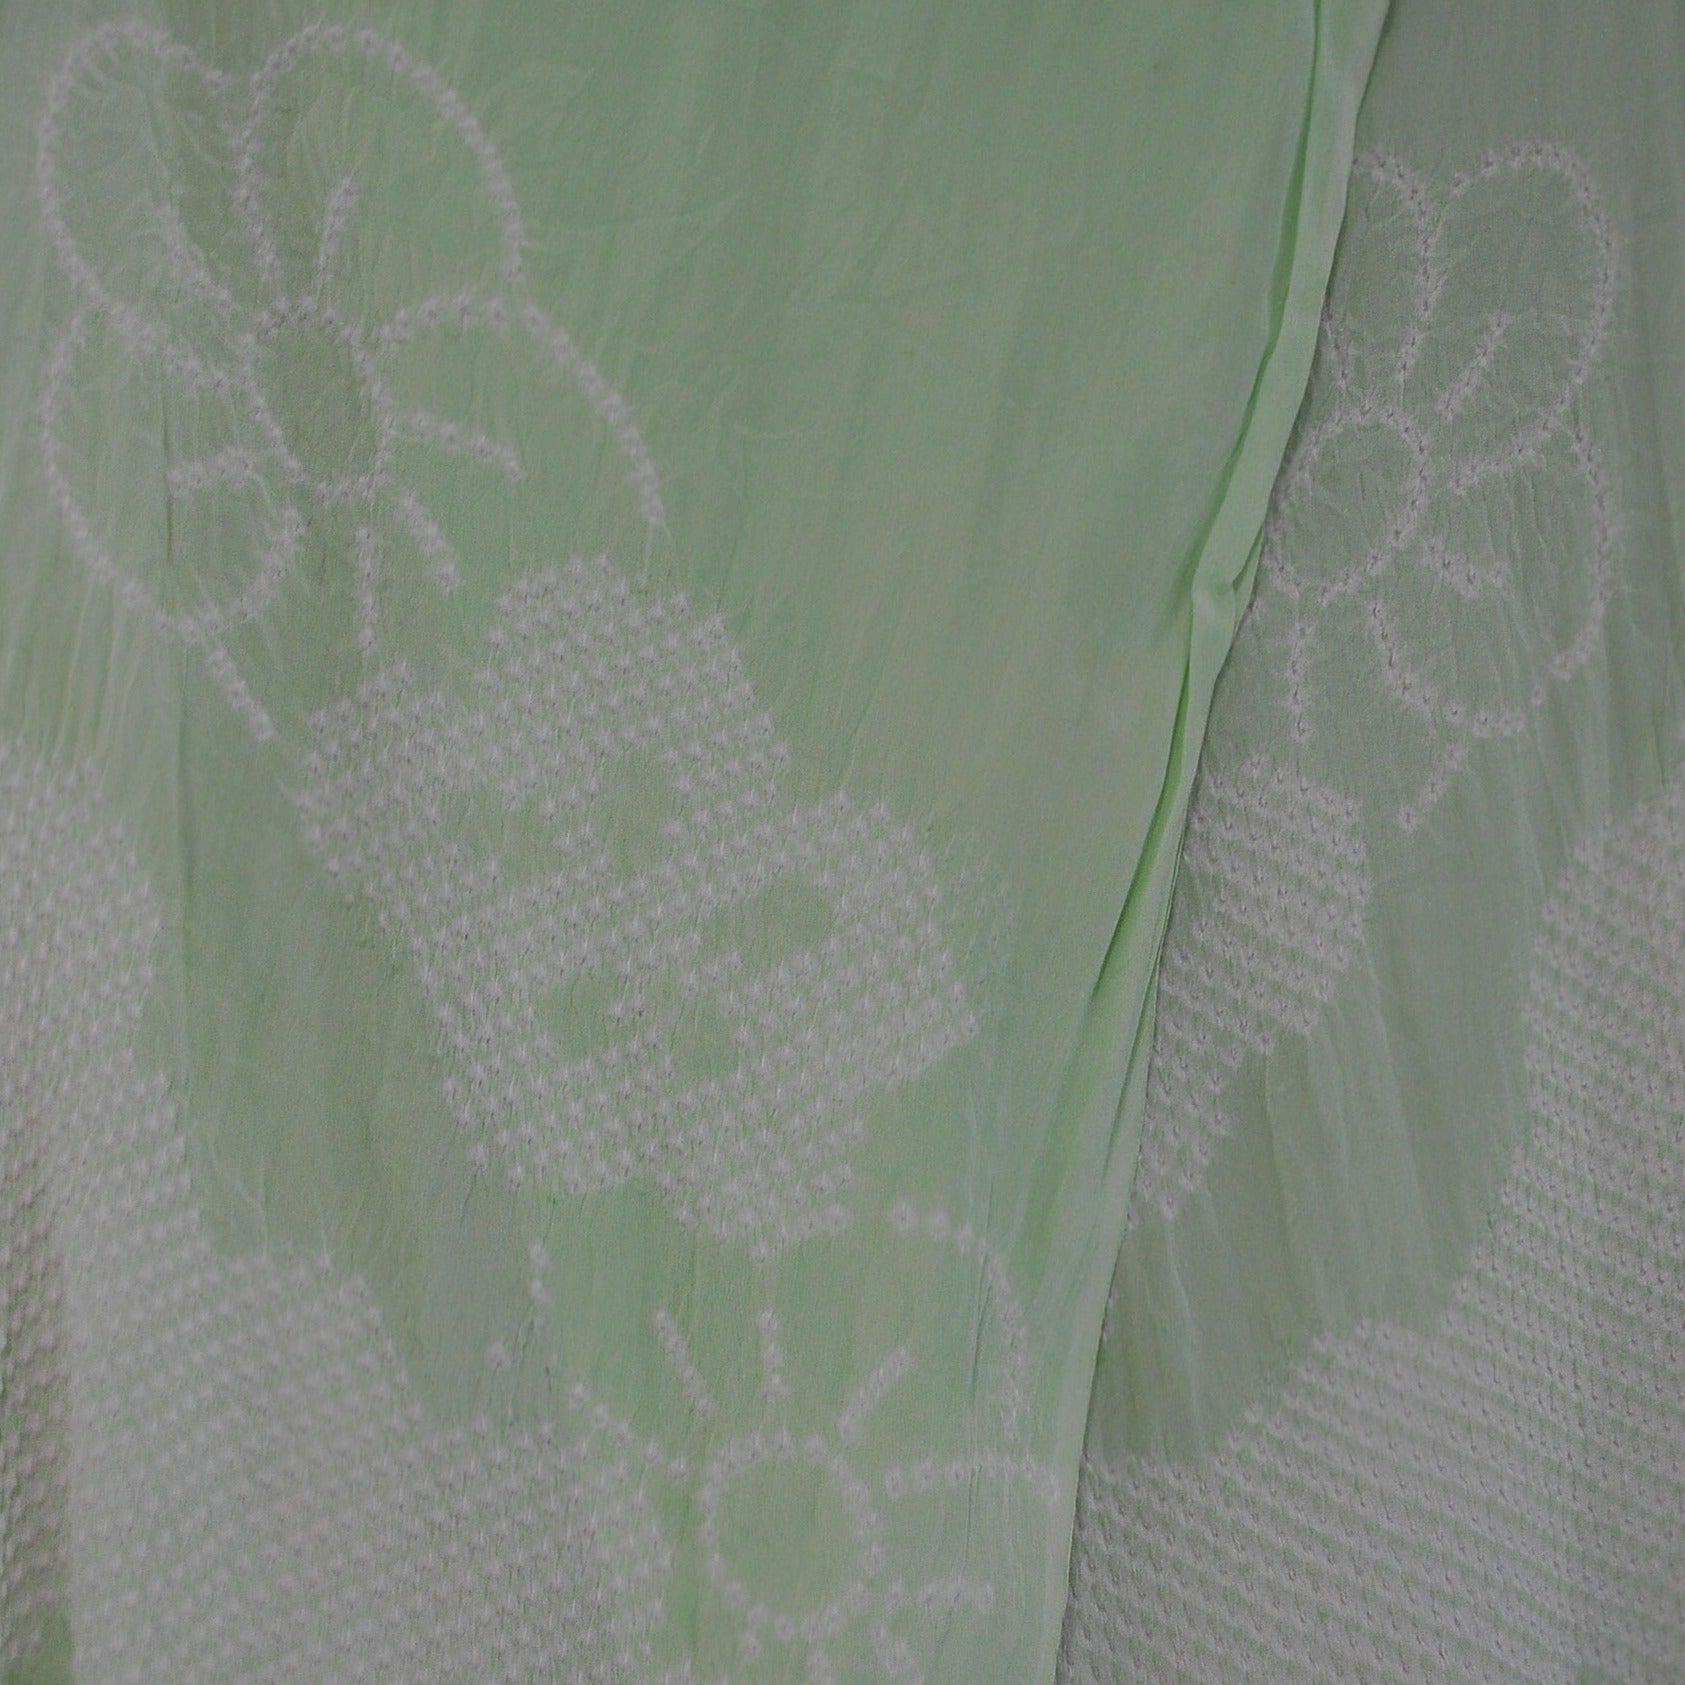 Springbud Cherry blossom and Cloud Pattern Shibori Silk Vintage Obiage Belt